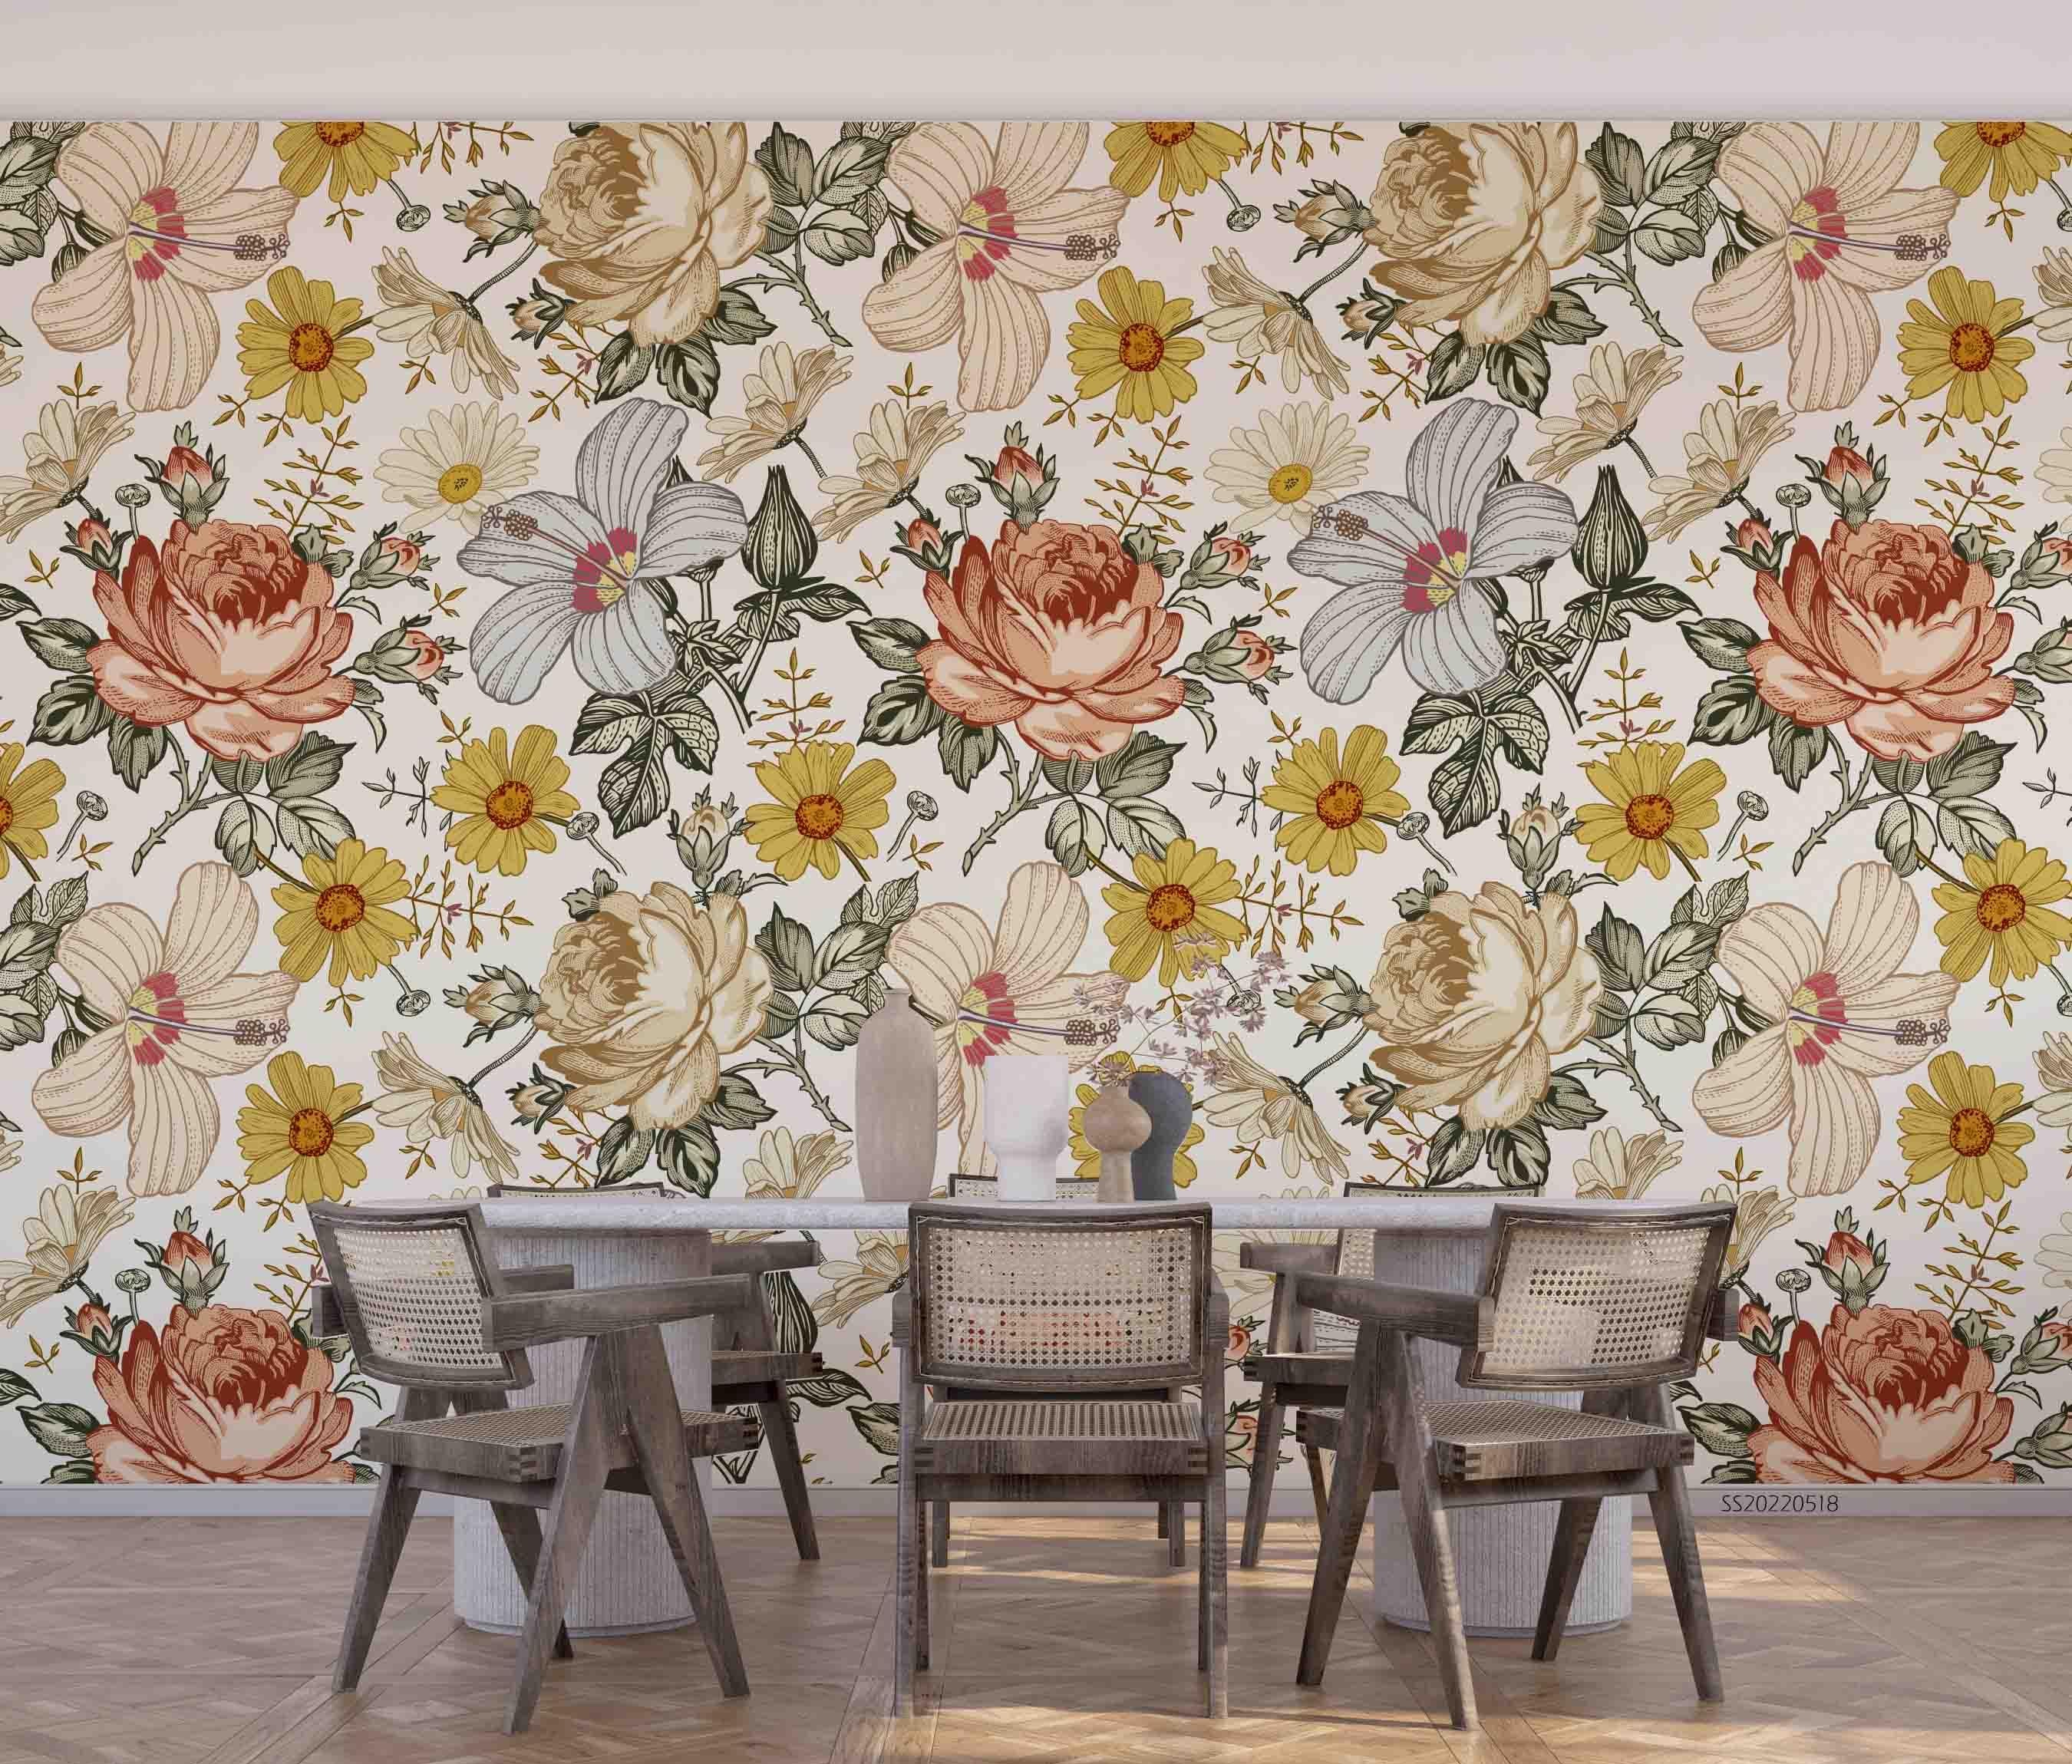 3D Vintage Floral Seamless Wall Mural Wallpaper SWW 86- Jess Art Decoration